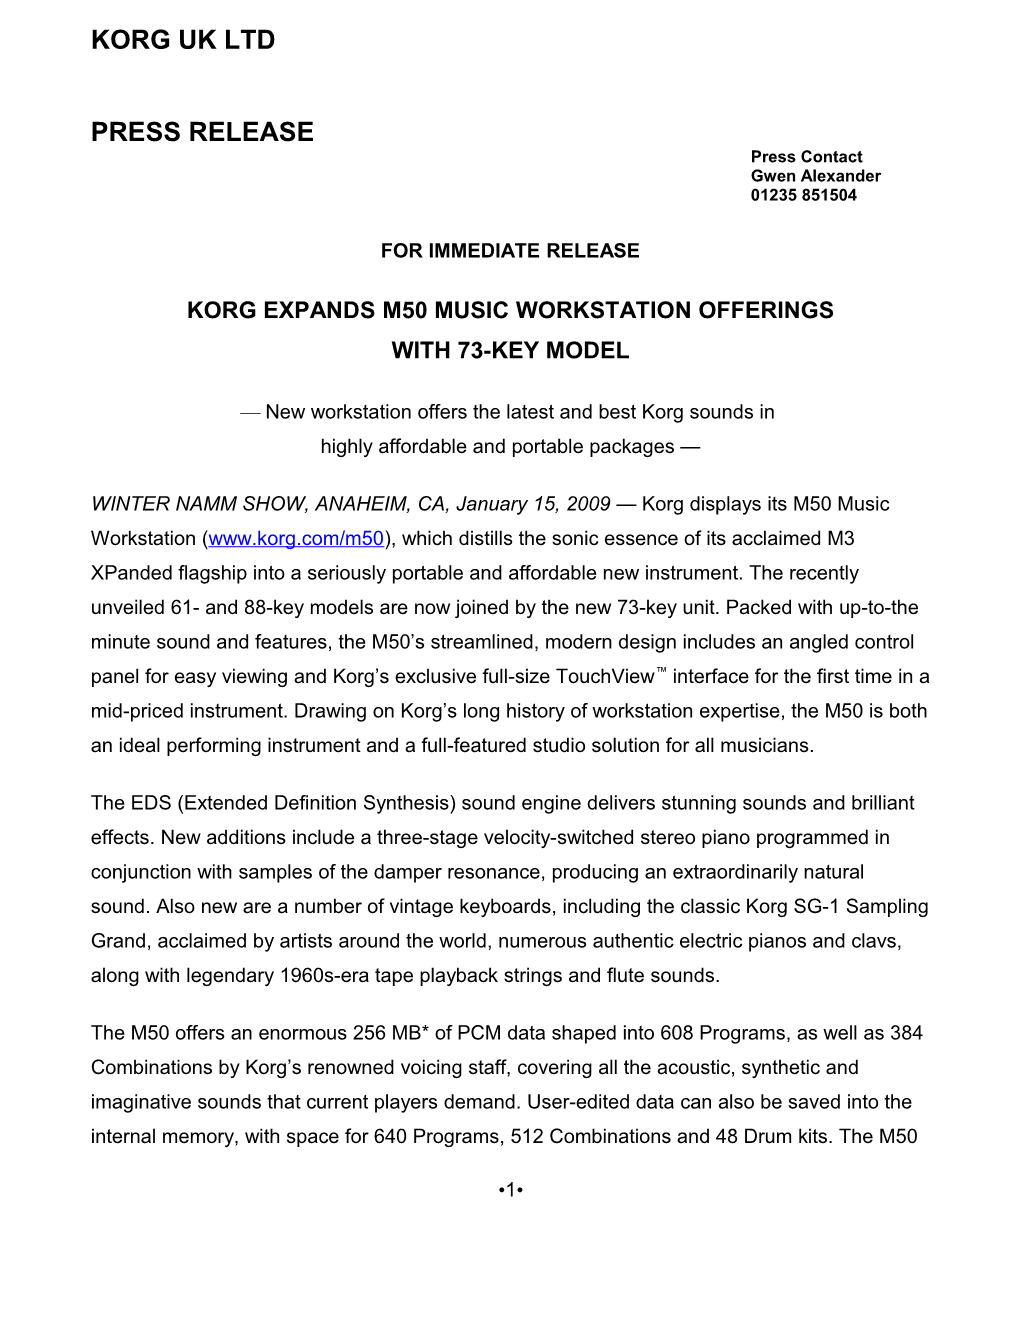 Korg Expands M50 Music Workstation Offerings